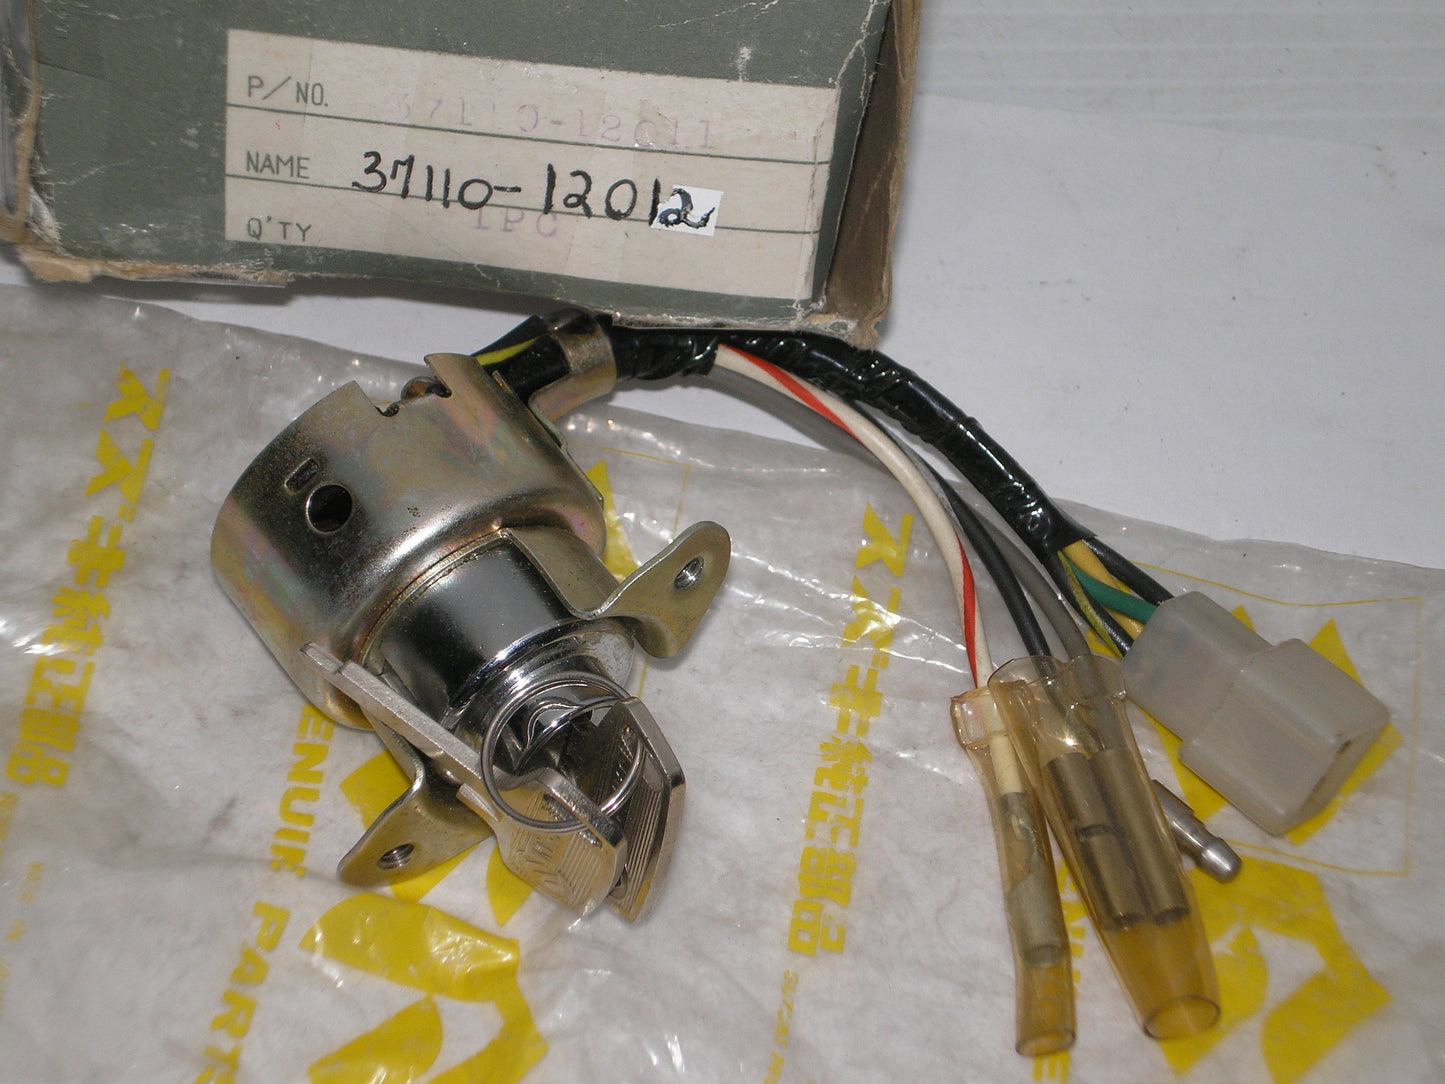 SUZUKI A100 AC100 AS100  Factory Ignition Switch  37110-12012 / 37110-12011 / 37110-12010